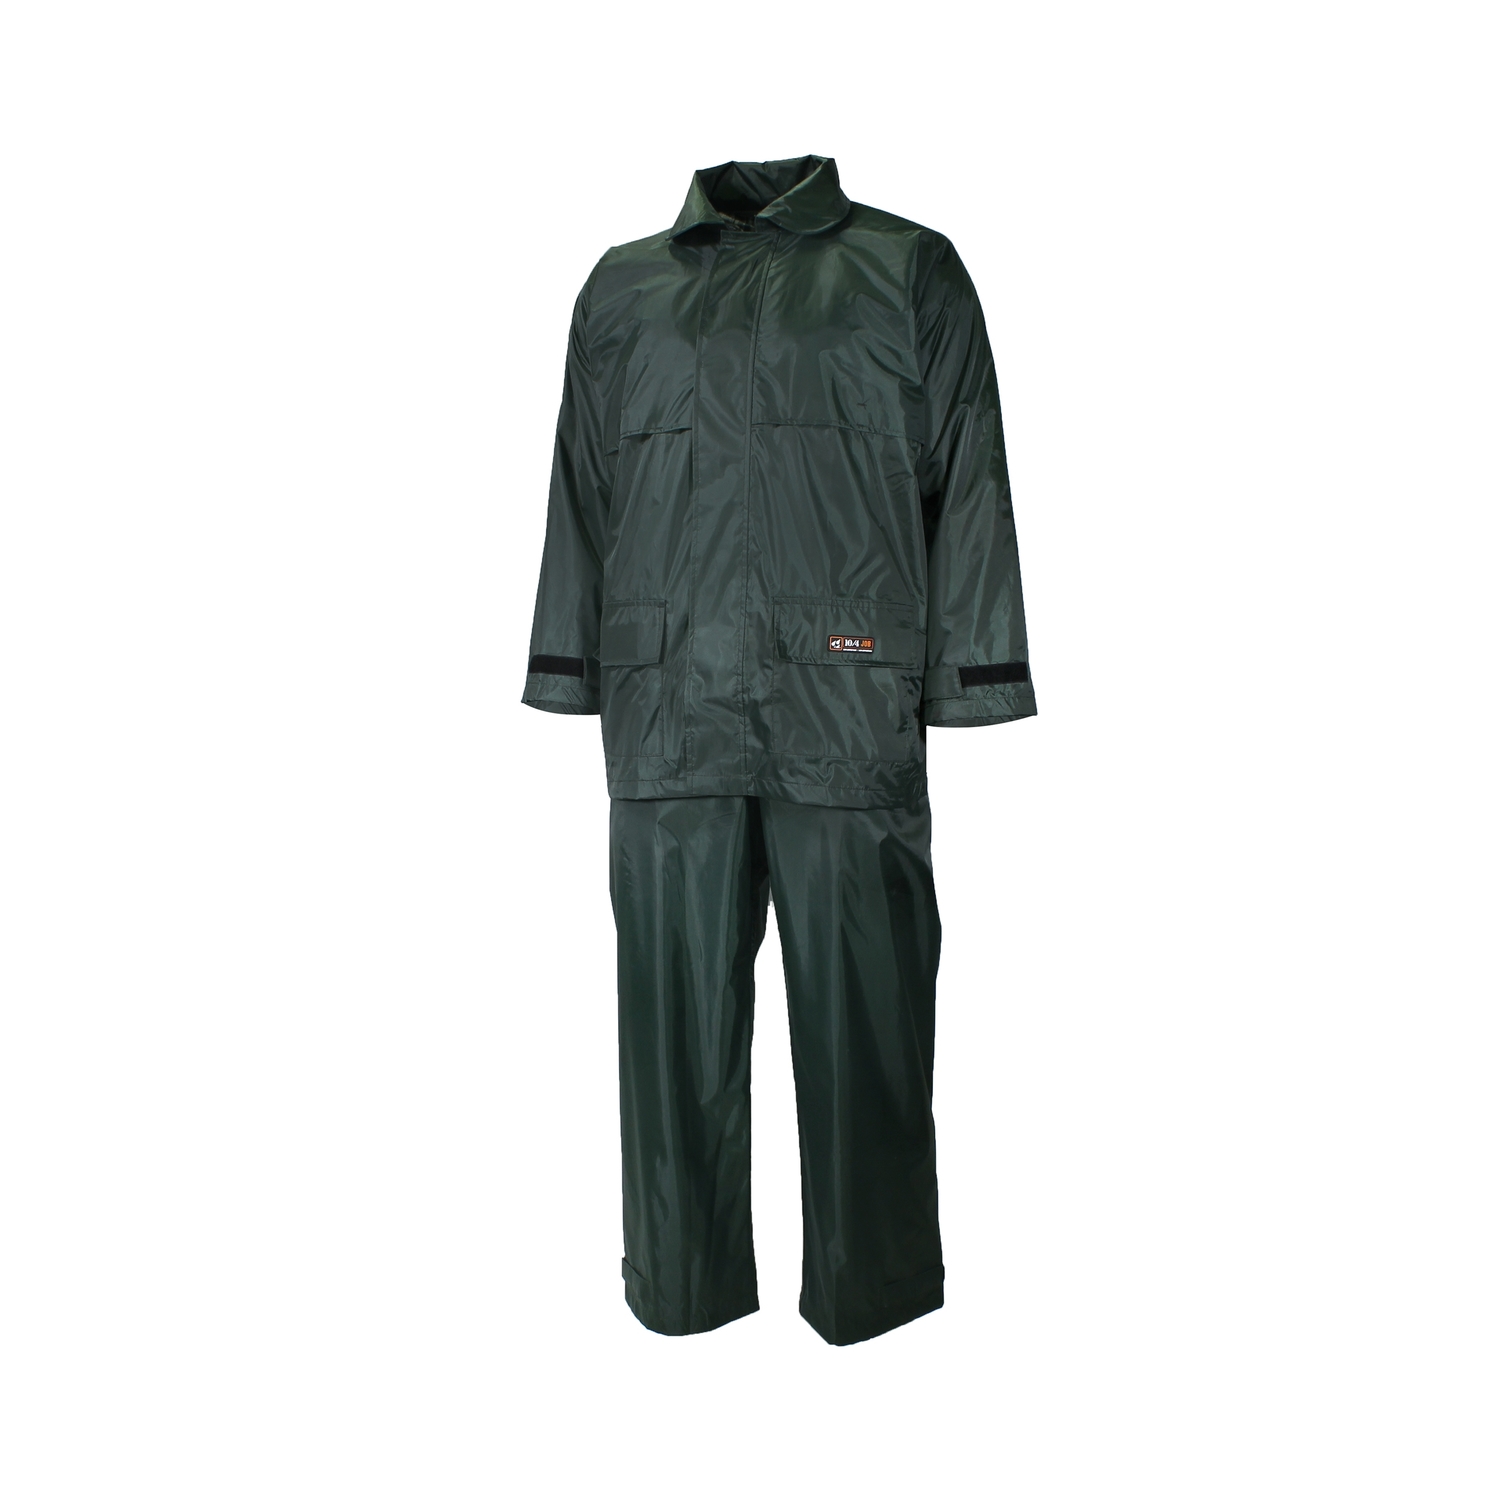 Nylon/pvc breathable rainsuit w/detachable hood